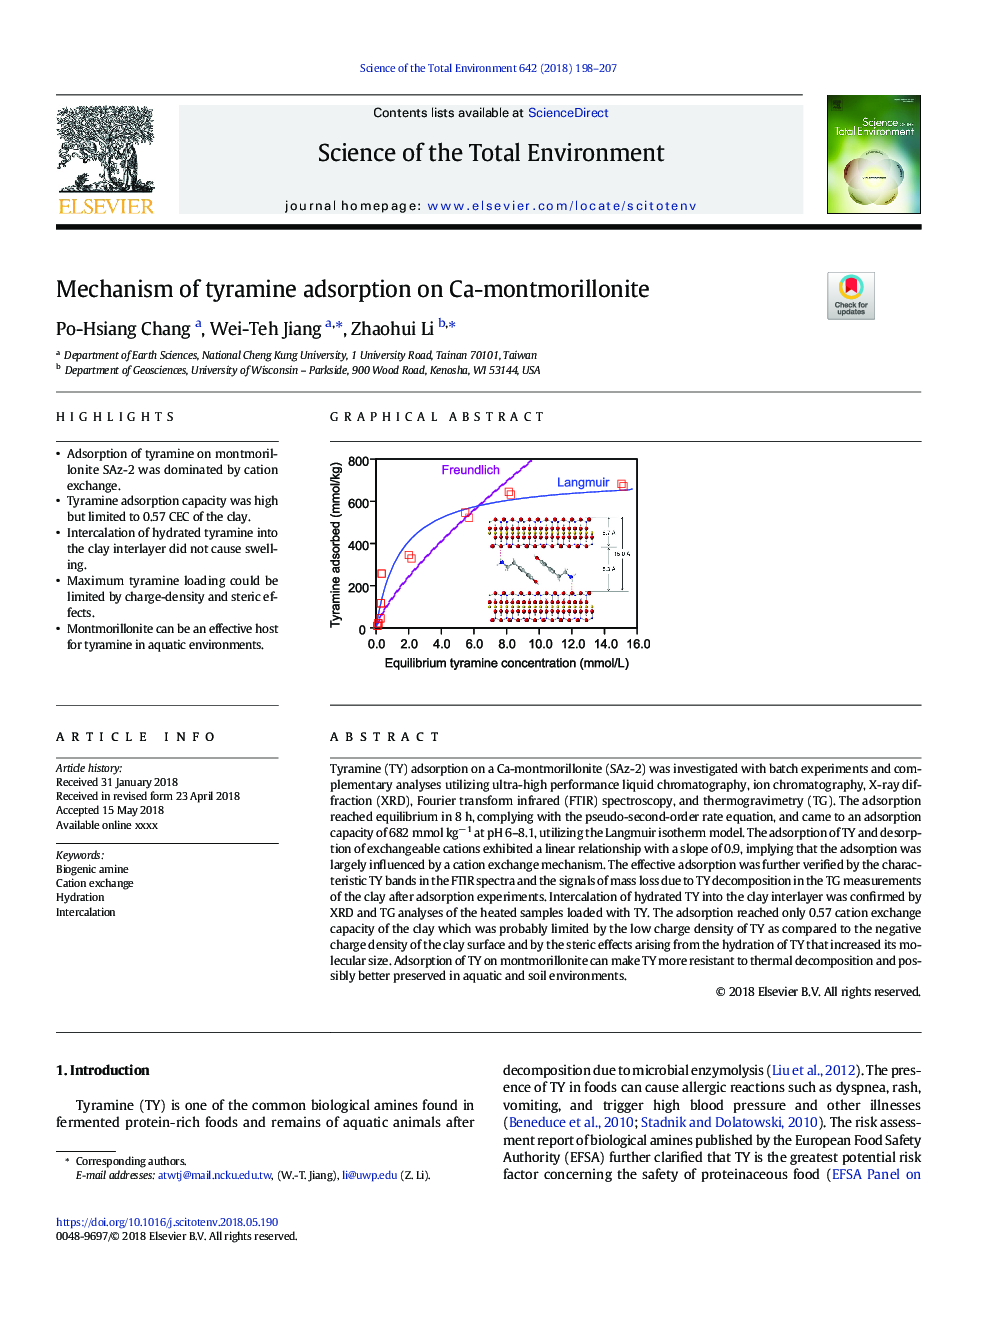 Mechanism of tyramine adsorption on Ca-montmorillonite